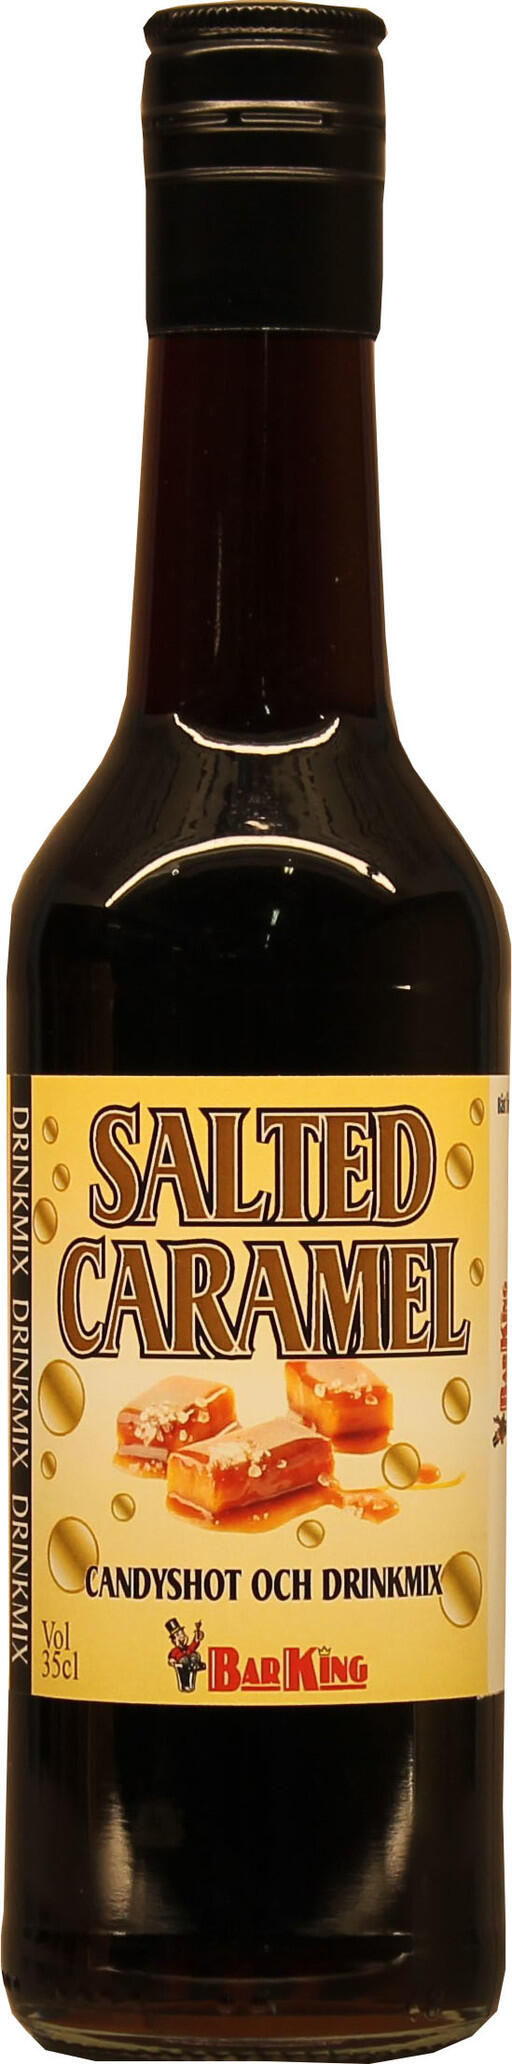 Salted Caramel candyshot och drinkmix.